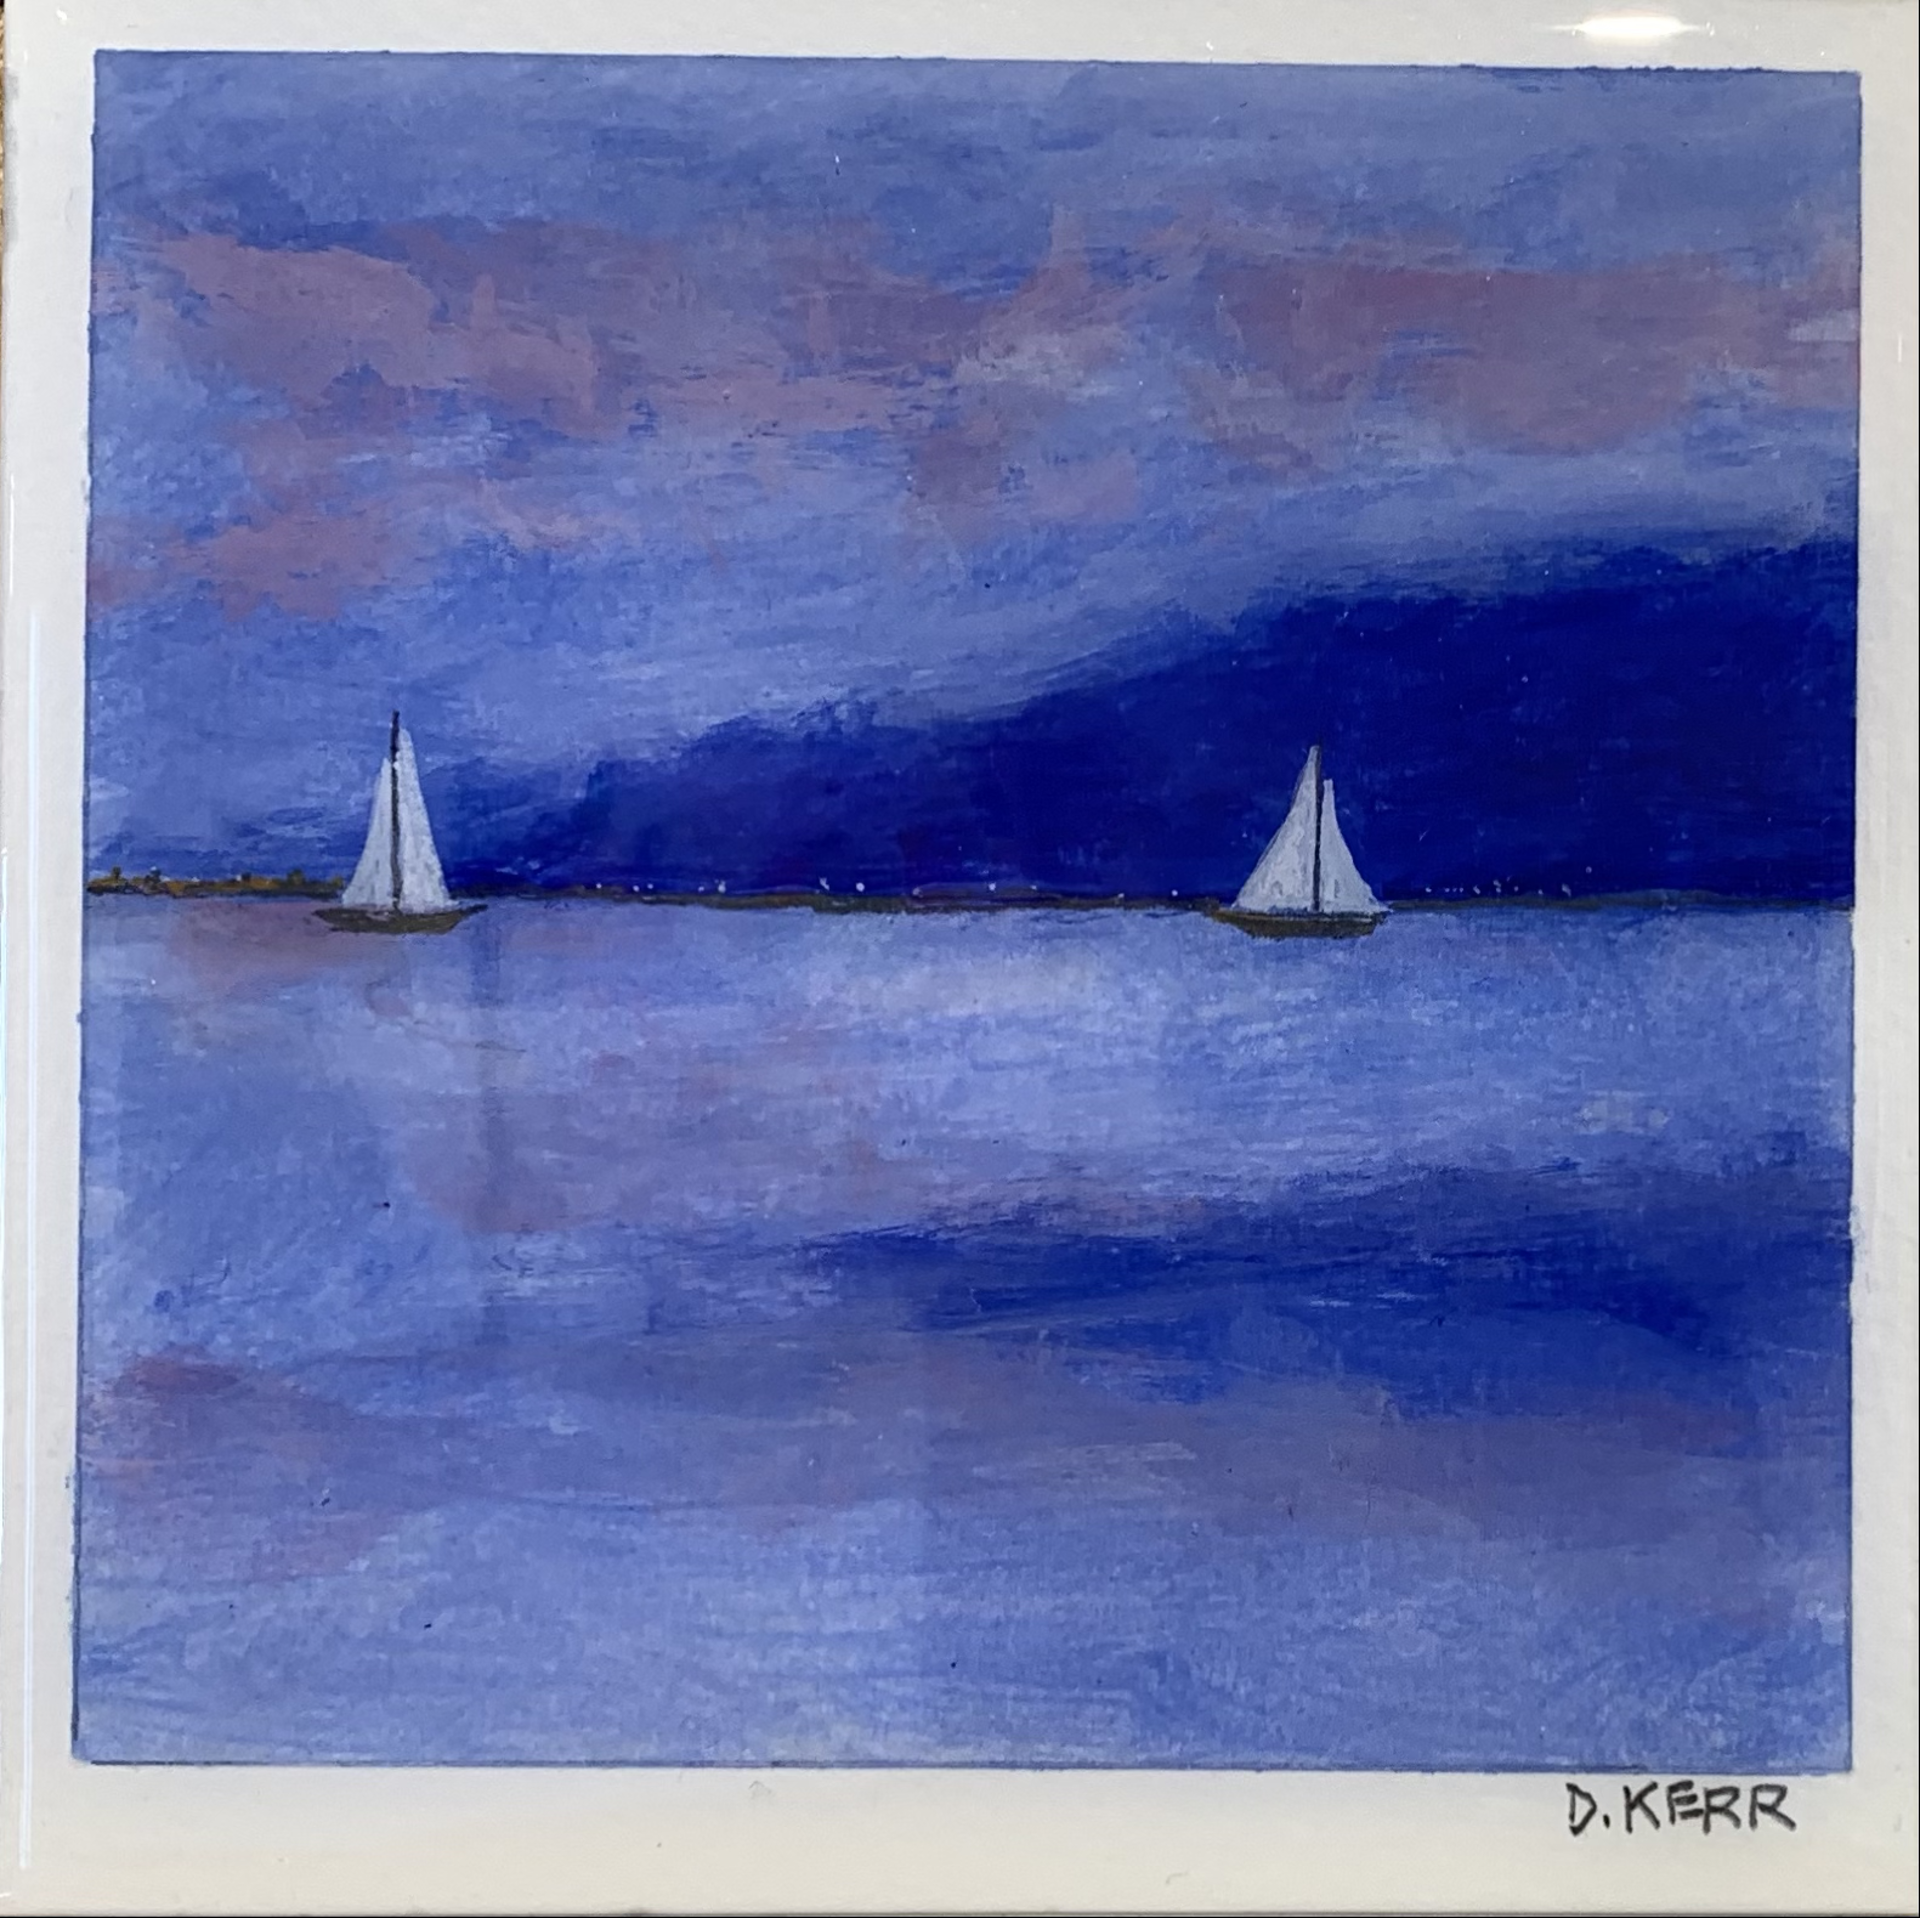 Sailing In The Harbor by Deborah Kerr